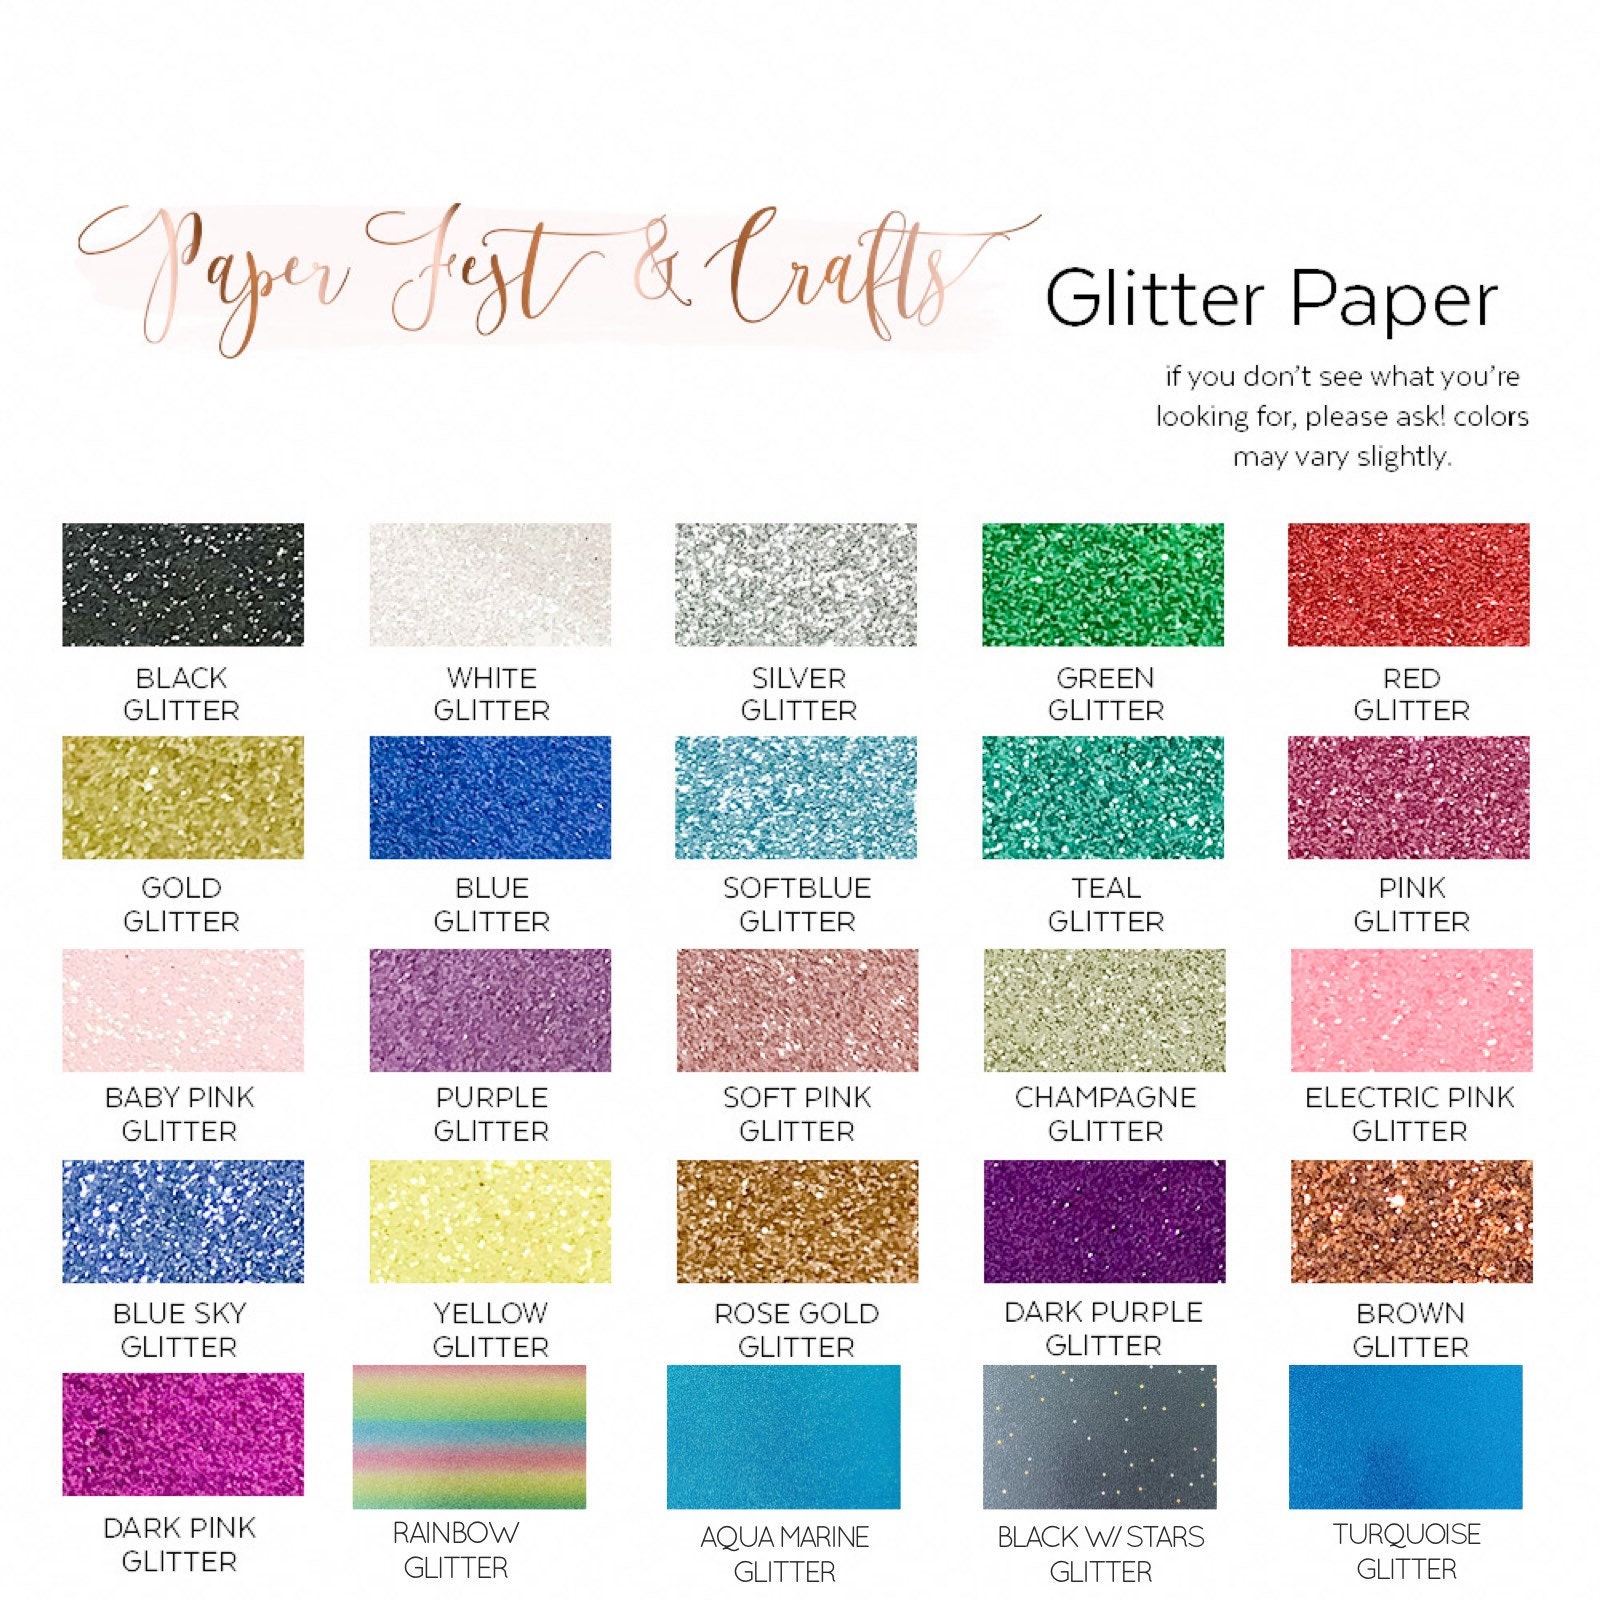 12x12 Rose Gold Glitter Cardstock, 300gsm Cardstock, Premium Glitter  Cardstock, Paper for Crafts 